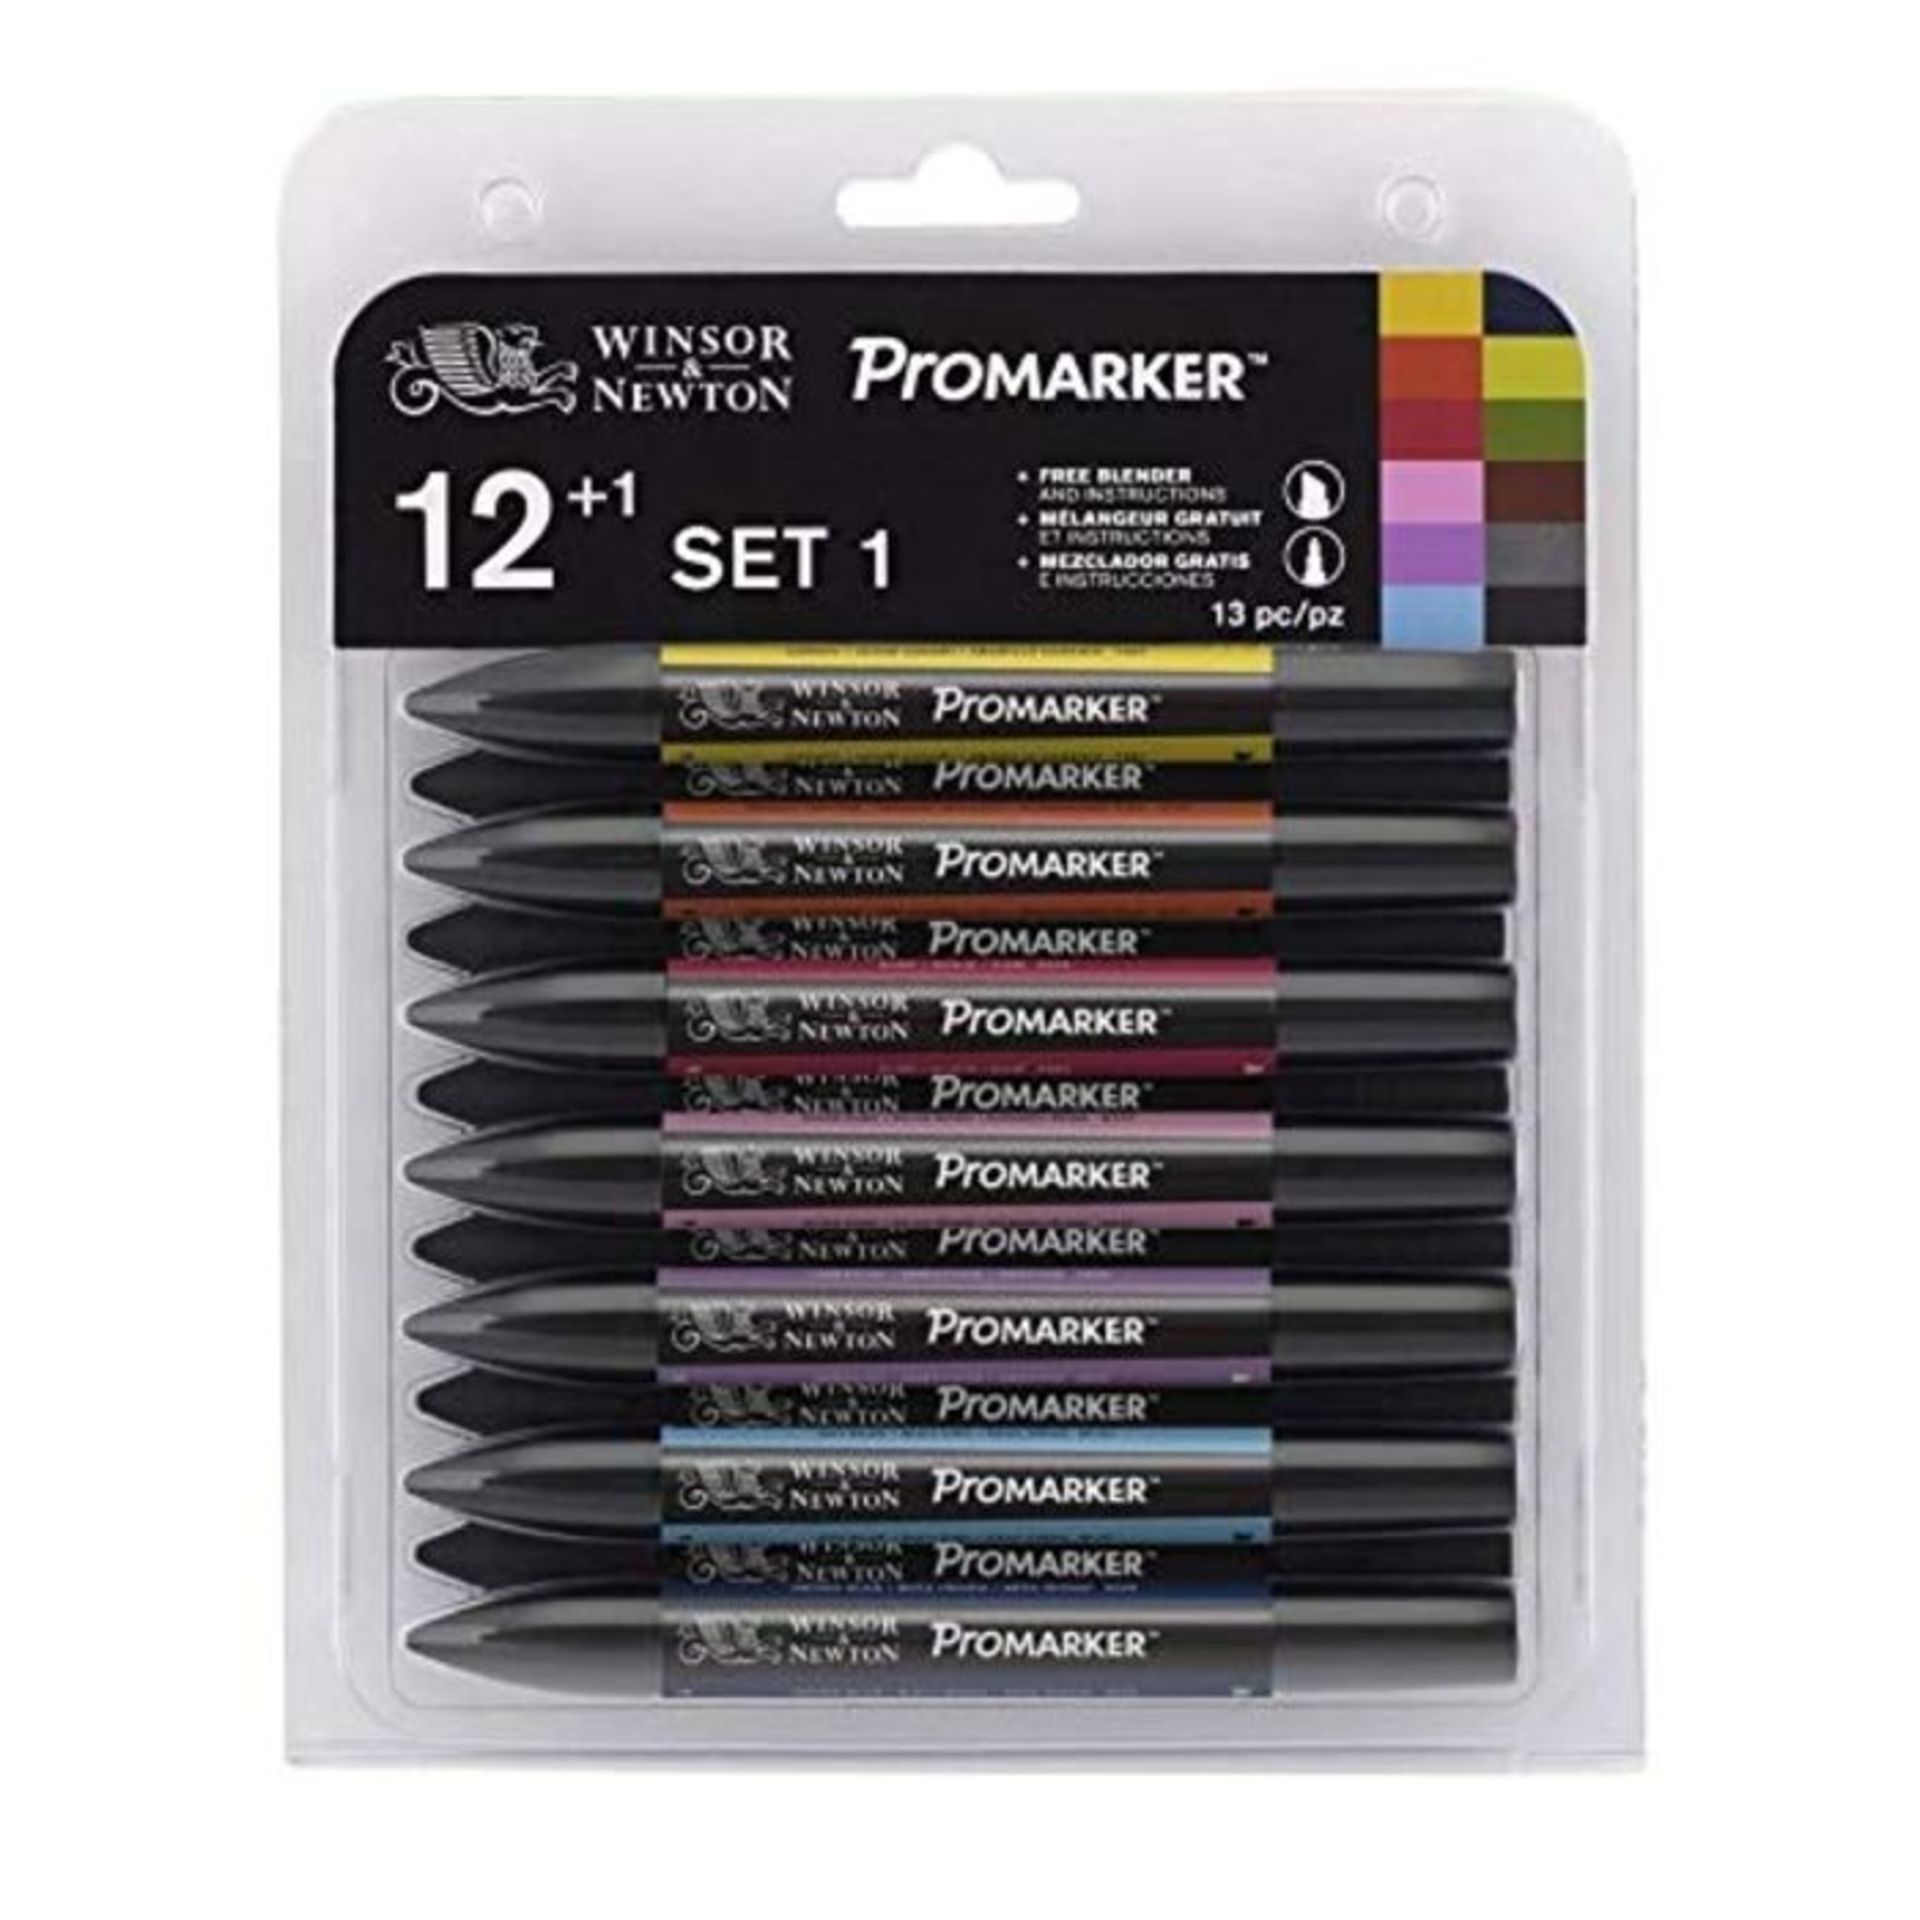 Letraset ProMarker Set No.1 - Pack of 1 (12 Colours and Free Blender)